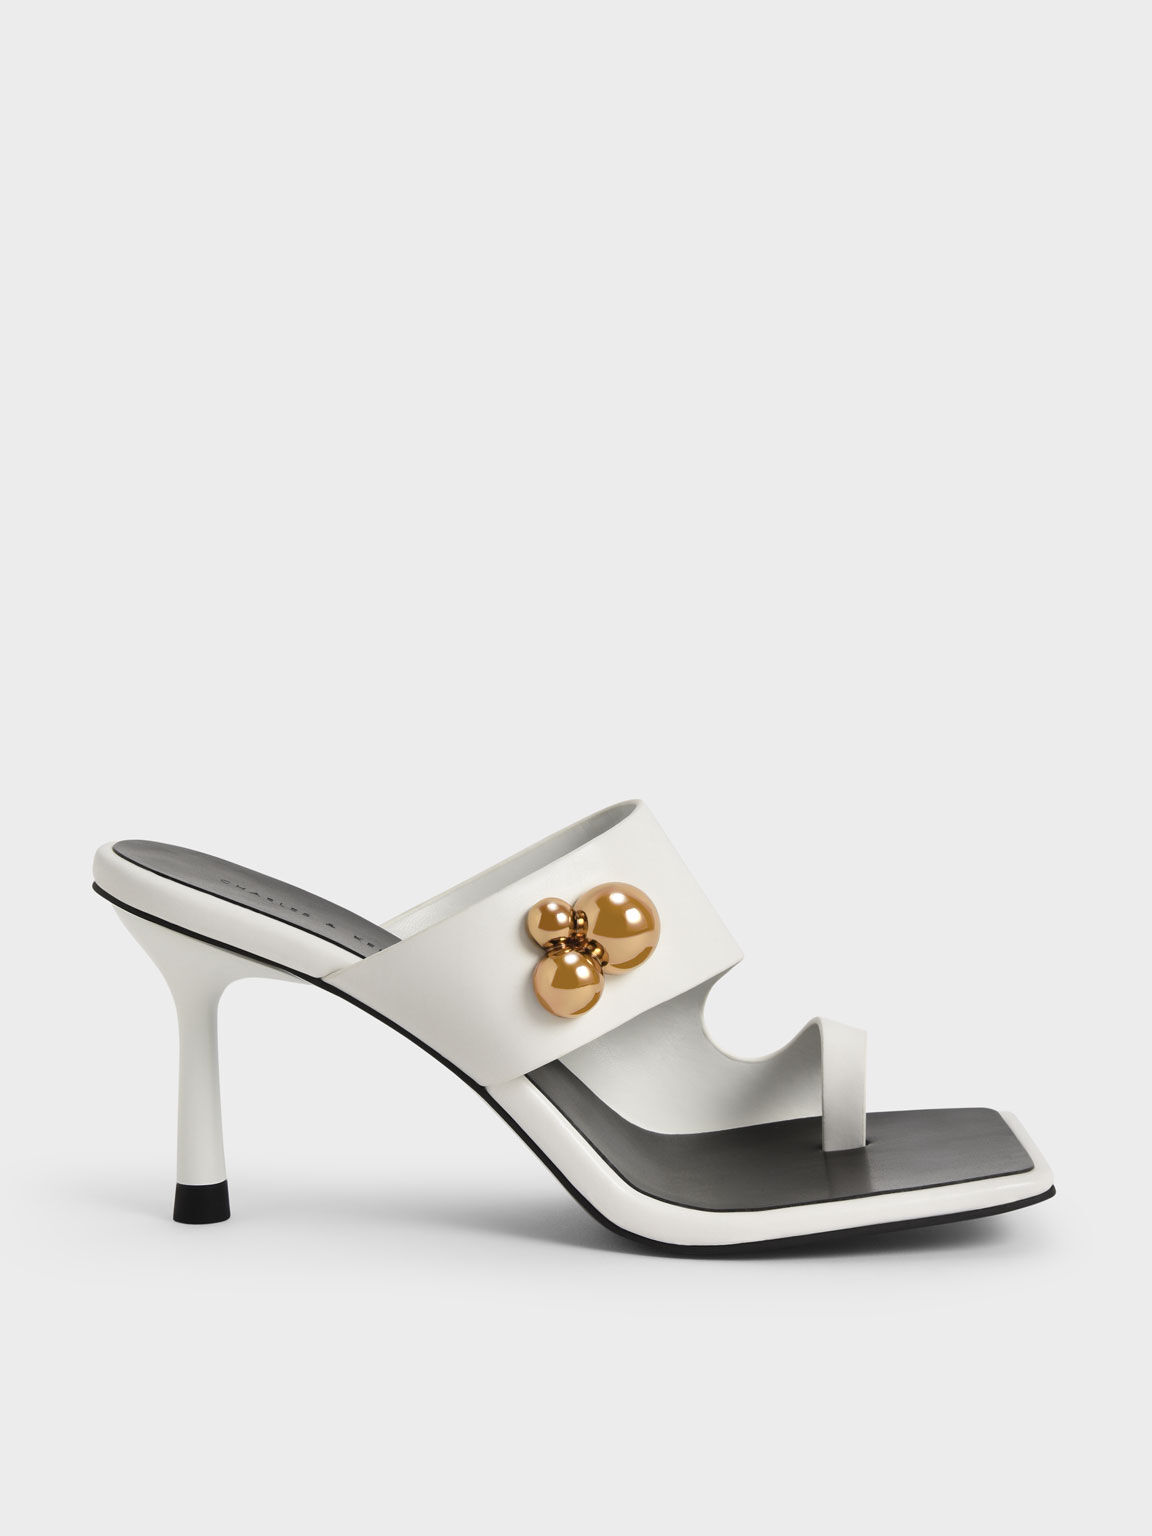 Sandal Thong Embellished Stiletto Heel, White, hi-res